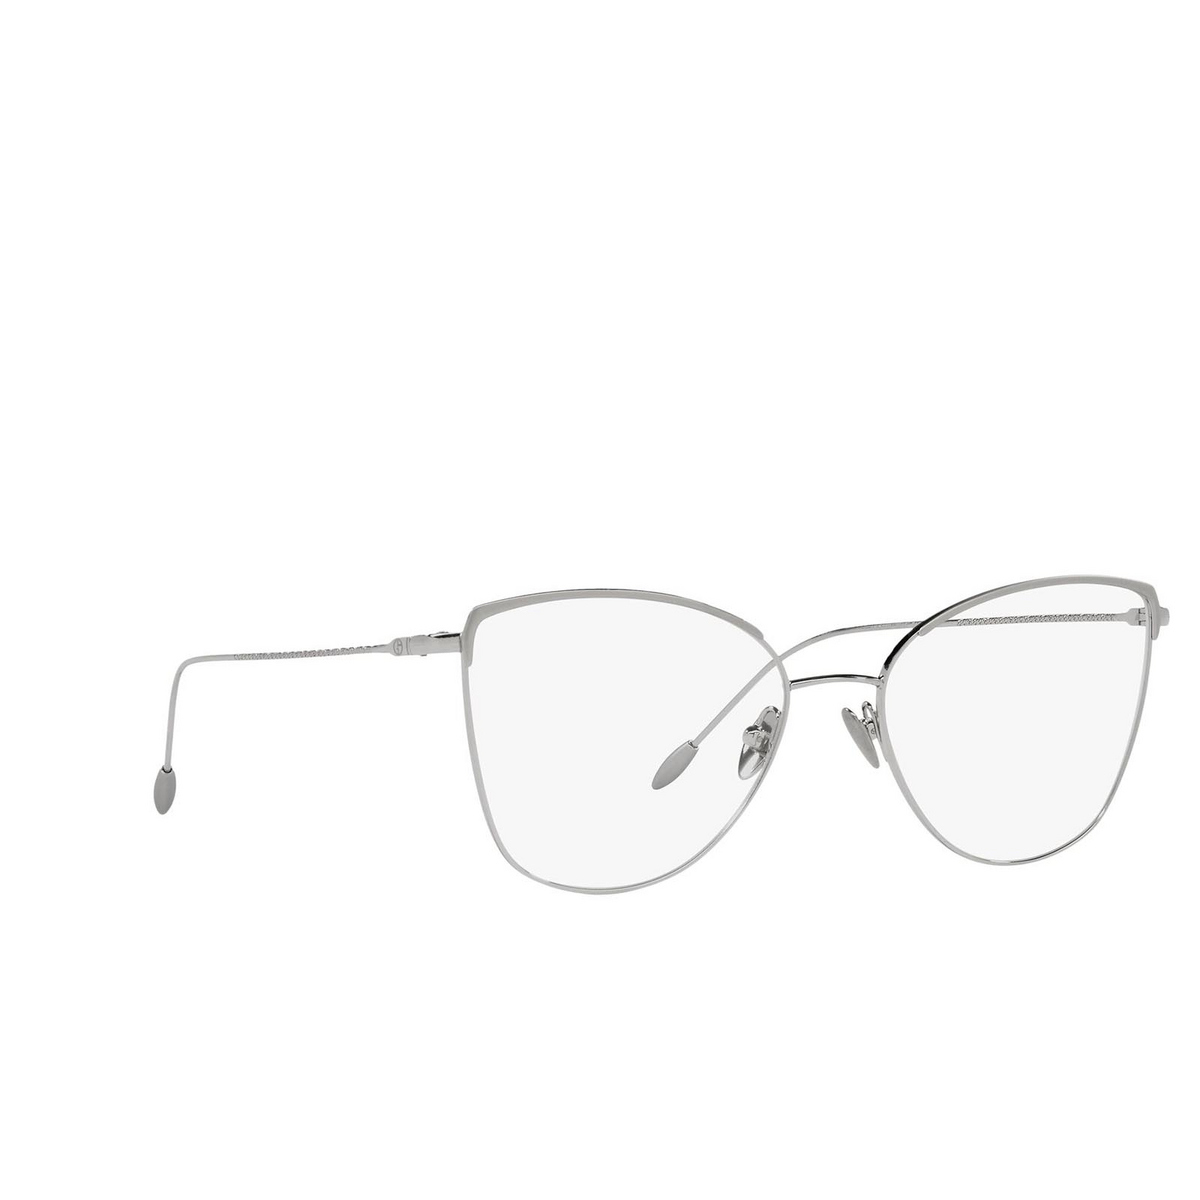 Giorgio Armani® Butterfly Eyeglasses: AR5110 color Matte/shiny Silver 3015 - three-quarters view.